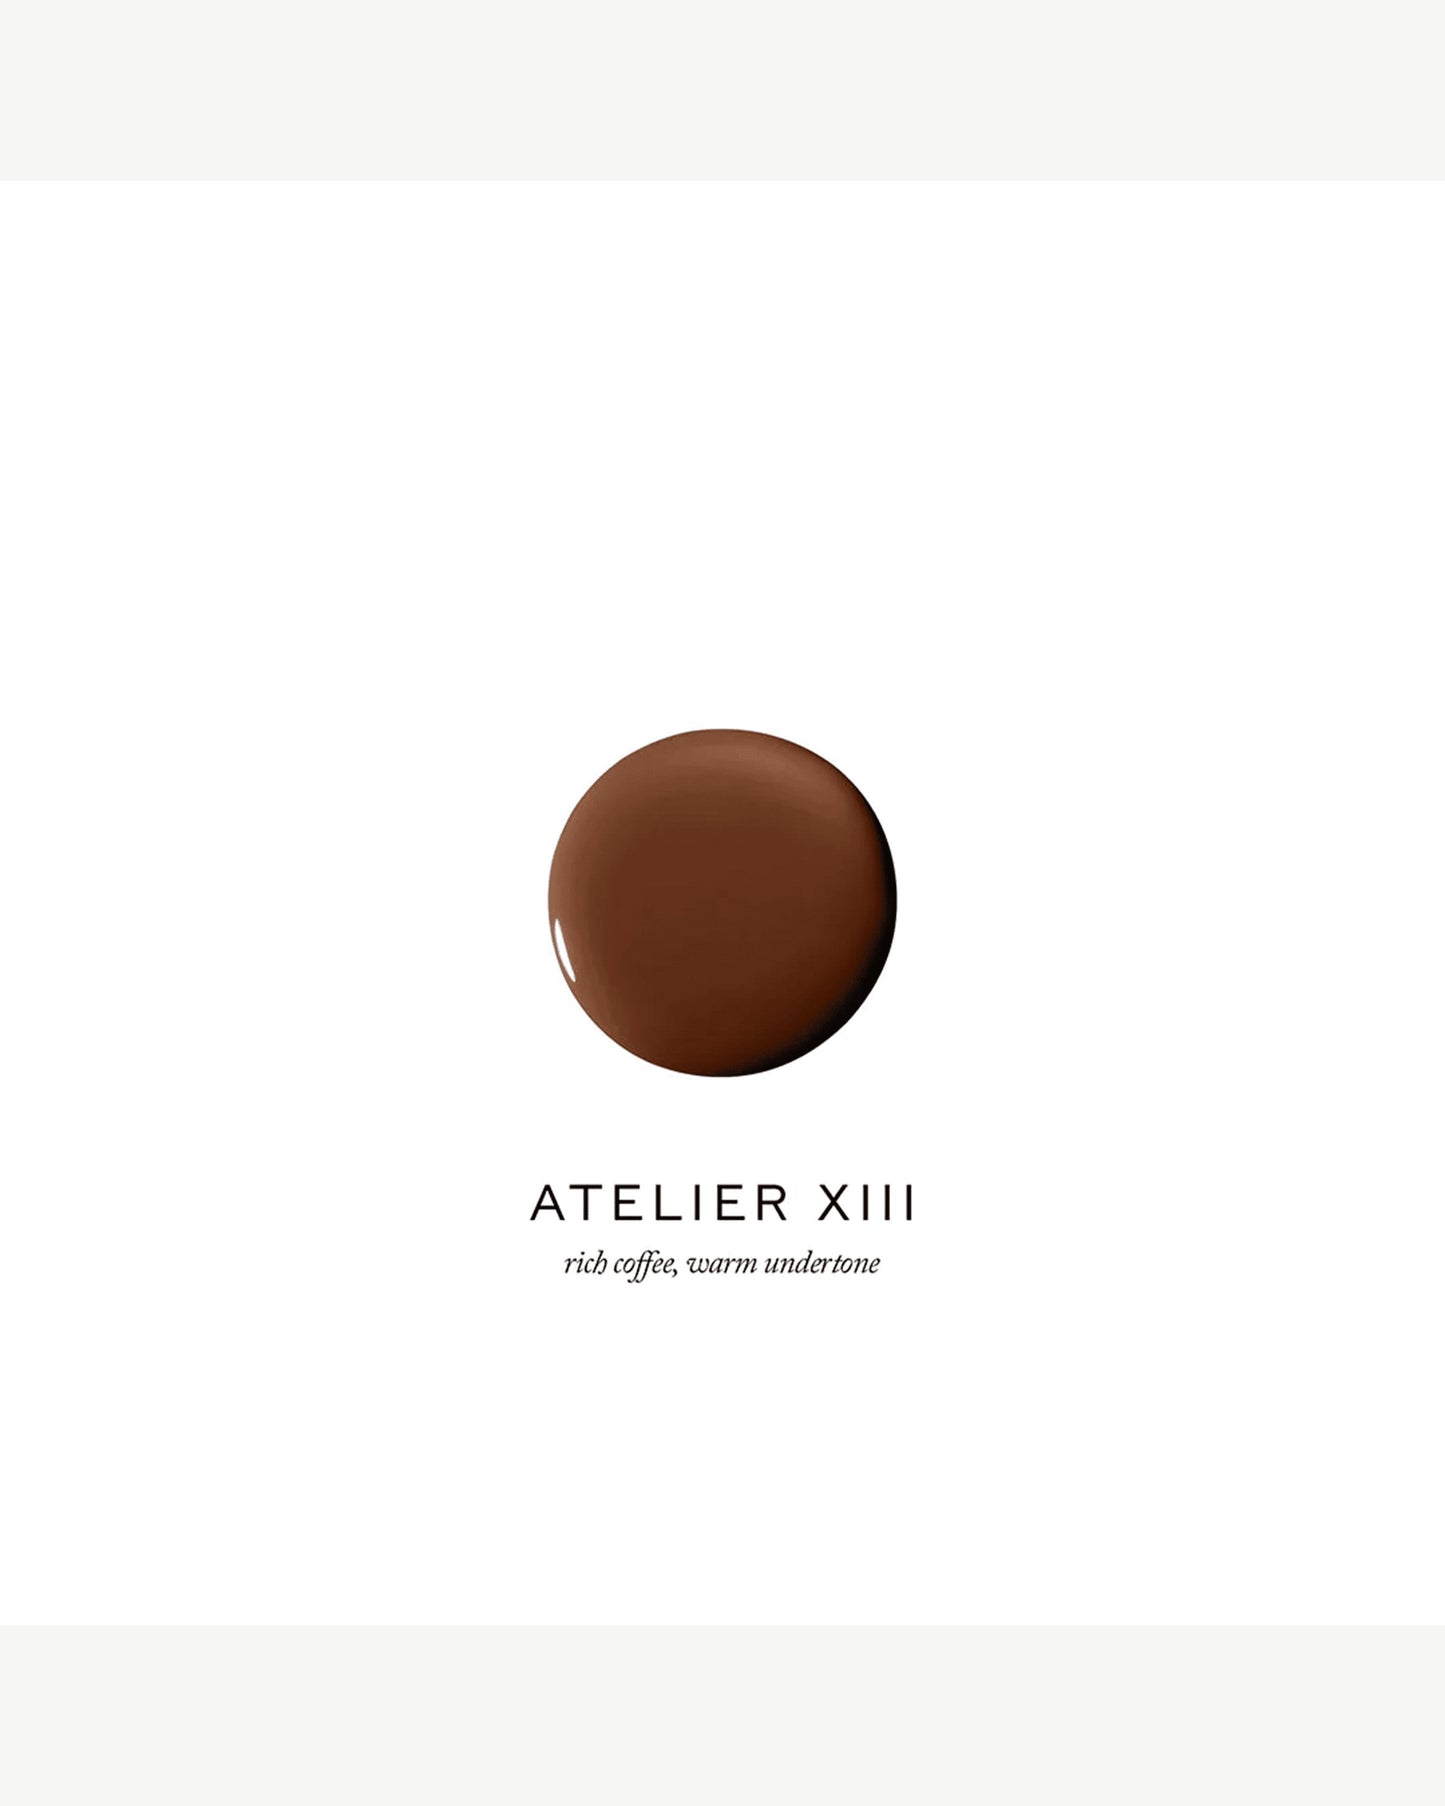 Atelier XIII (rich coffee, warm undertone)